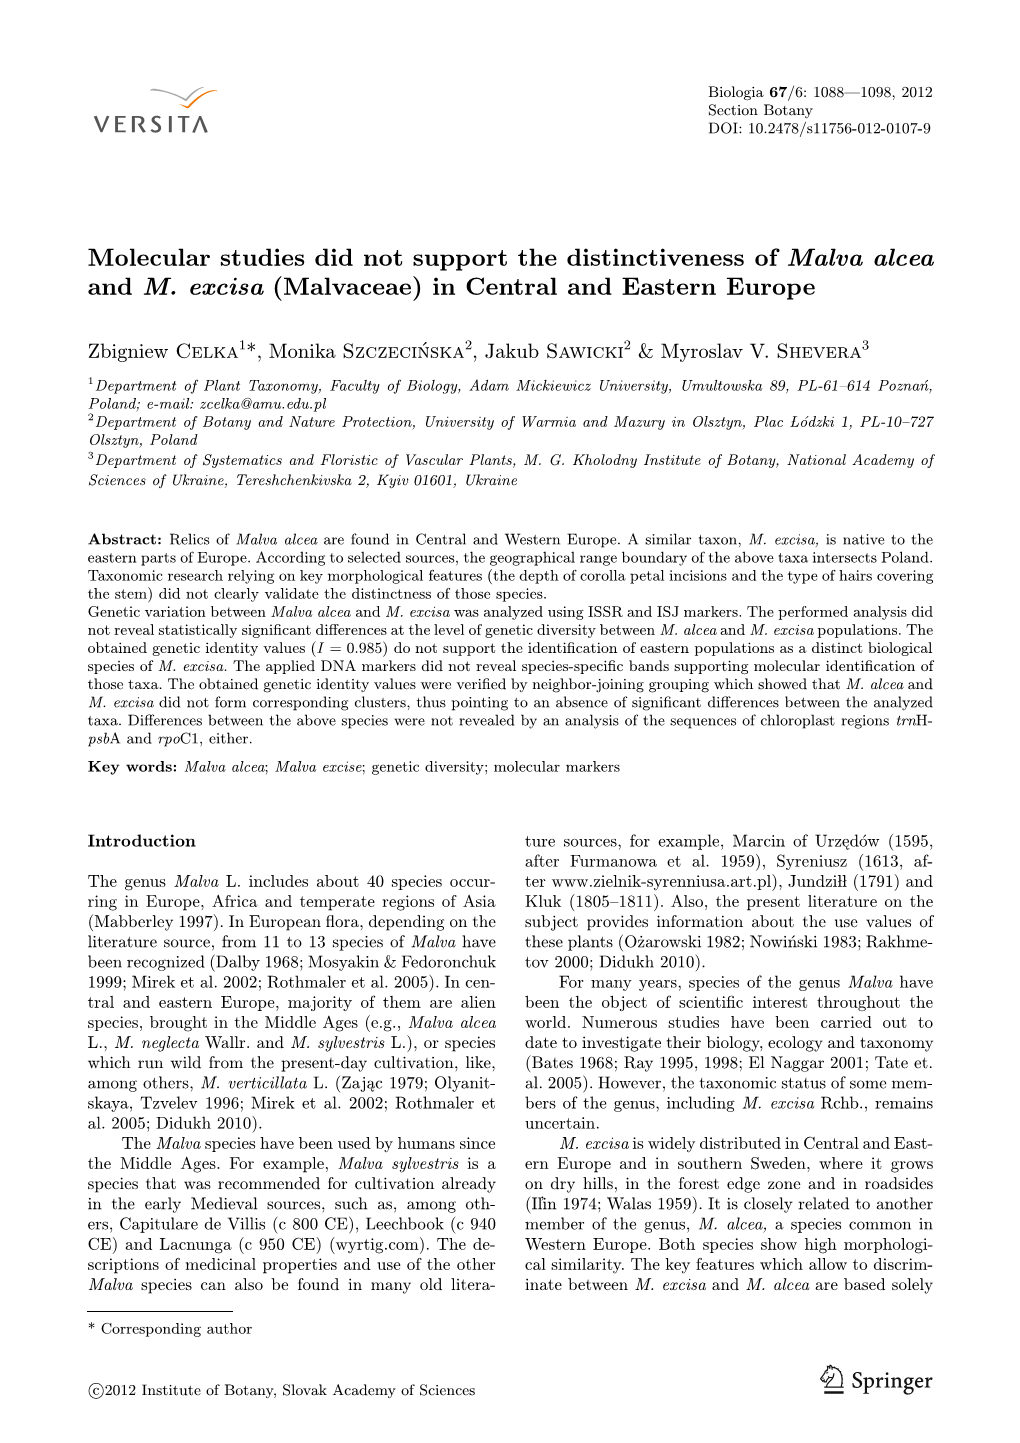 Molecular Studies Did Not Support the Distinctiveness of Malva Alcea and M